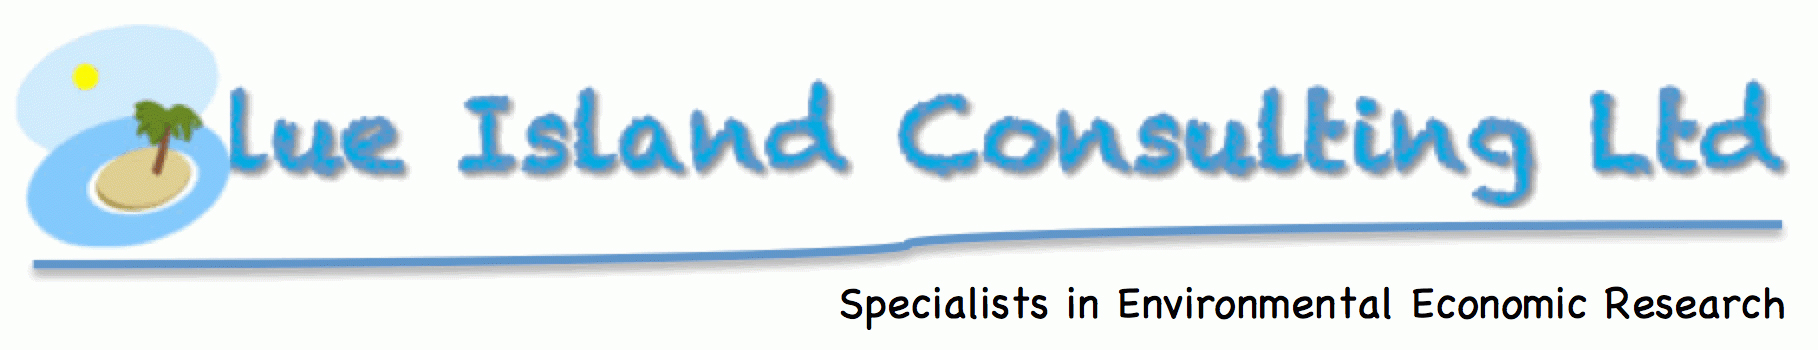 Blue Island Consulting Ltd logo